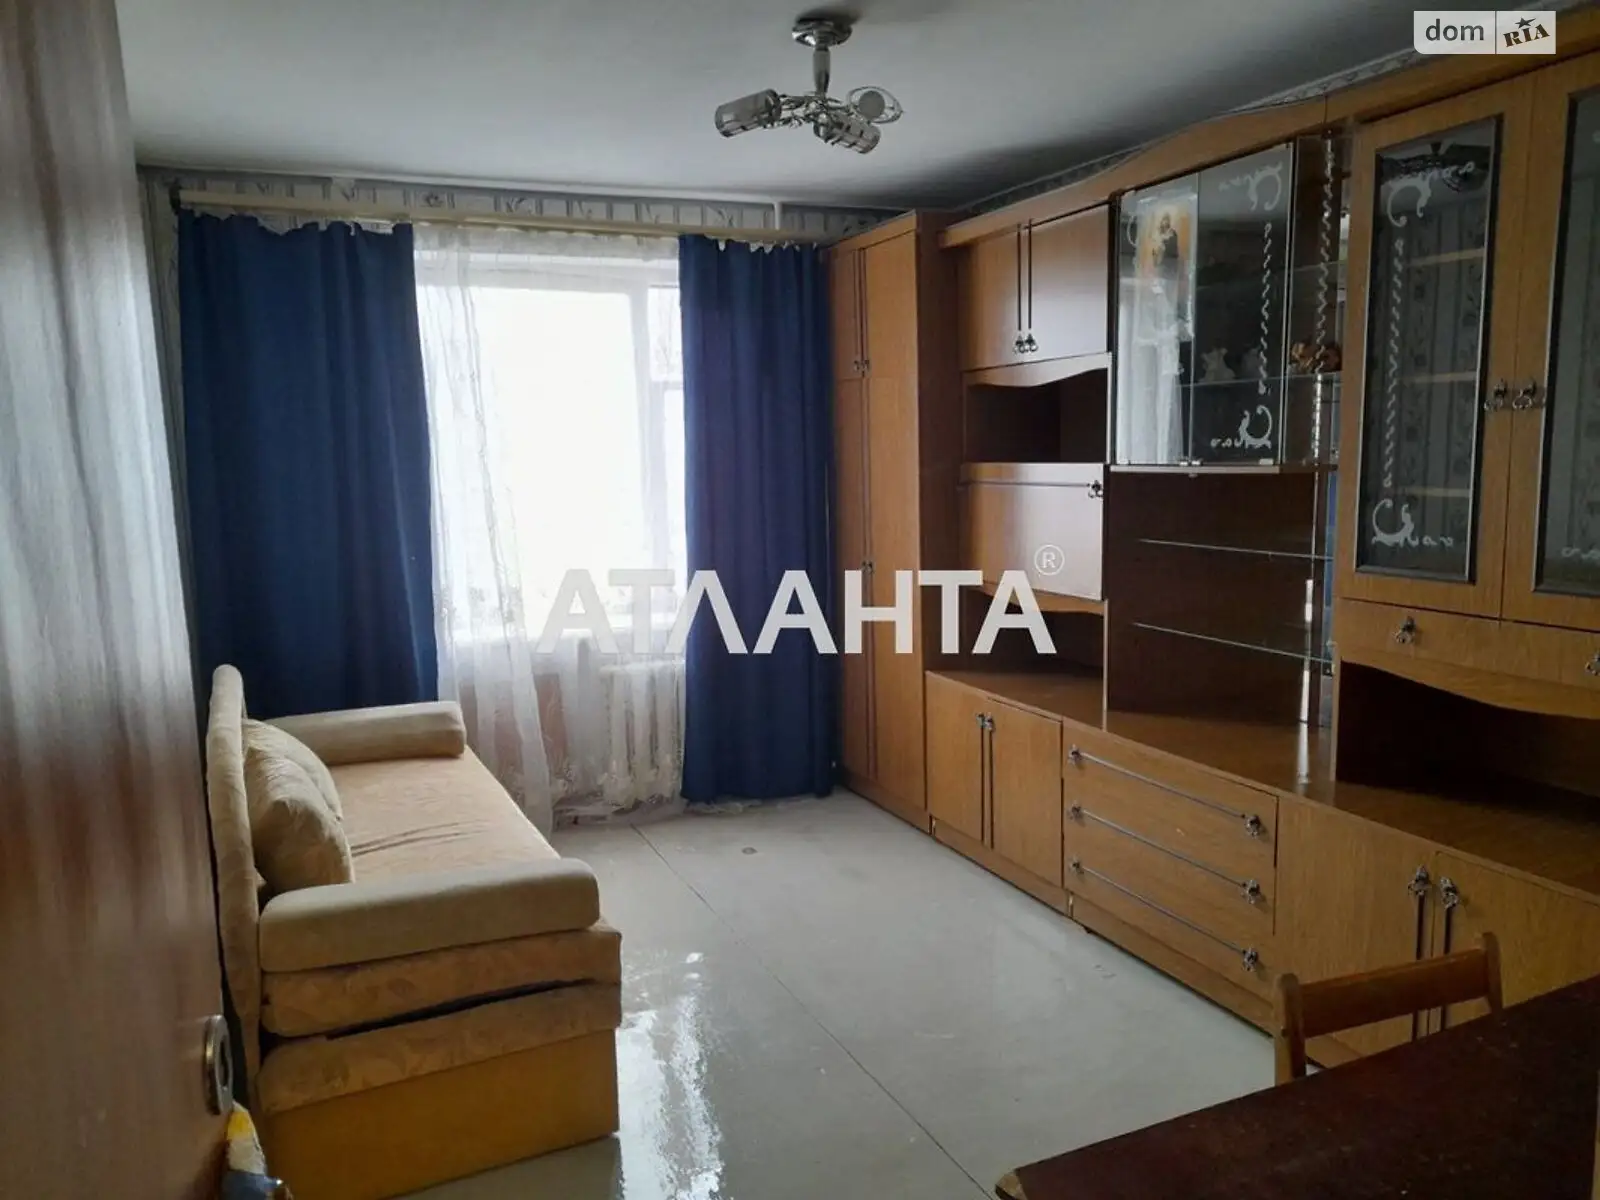 Продается комната 43 кв. м в Одессе, цена: 19000 $ - фото 1